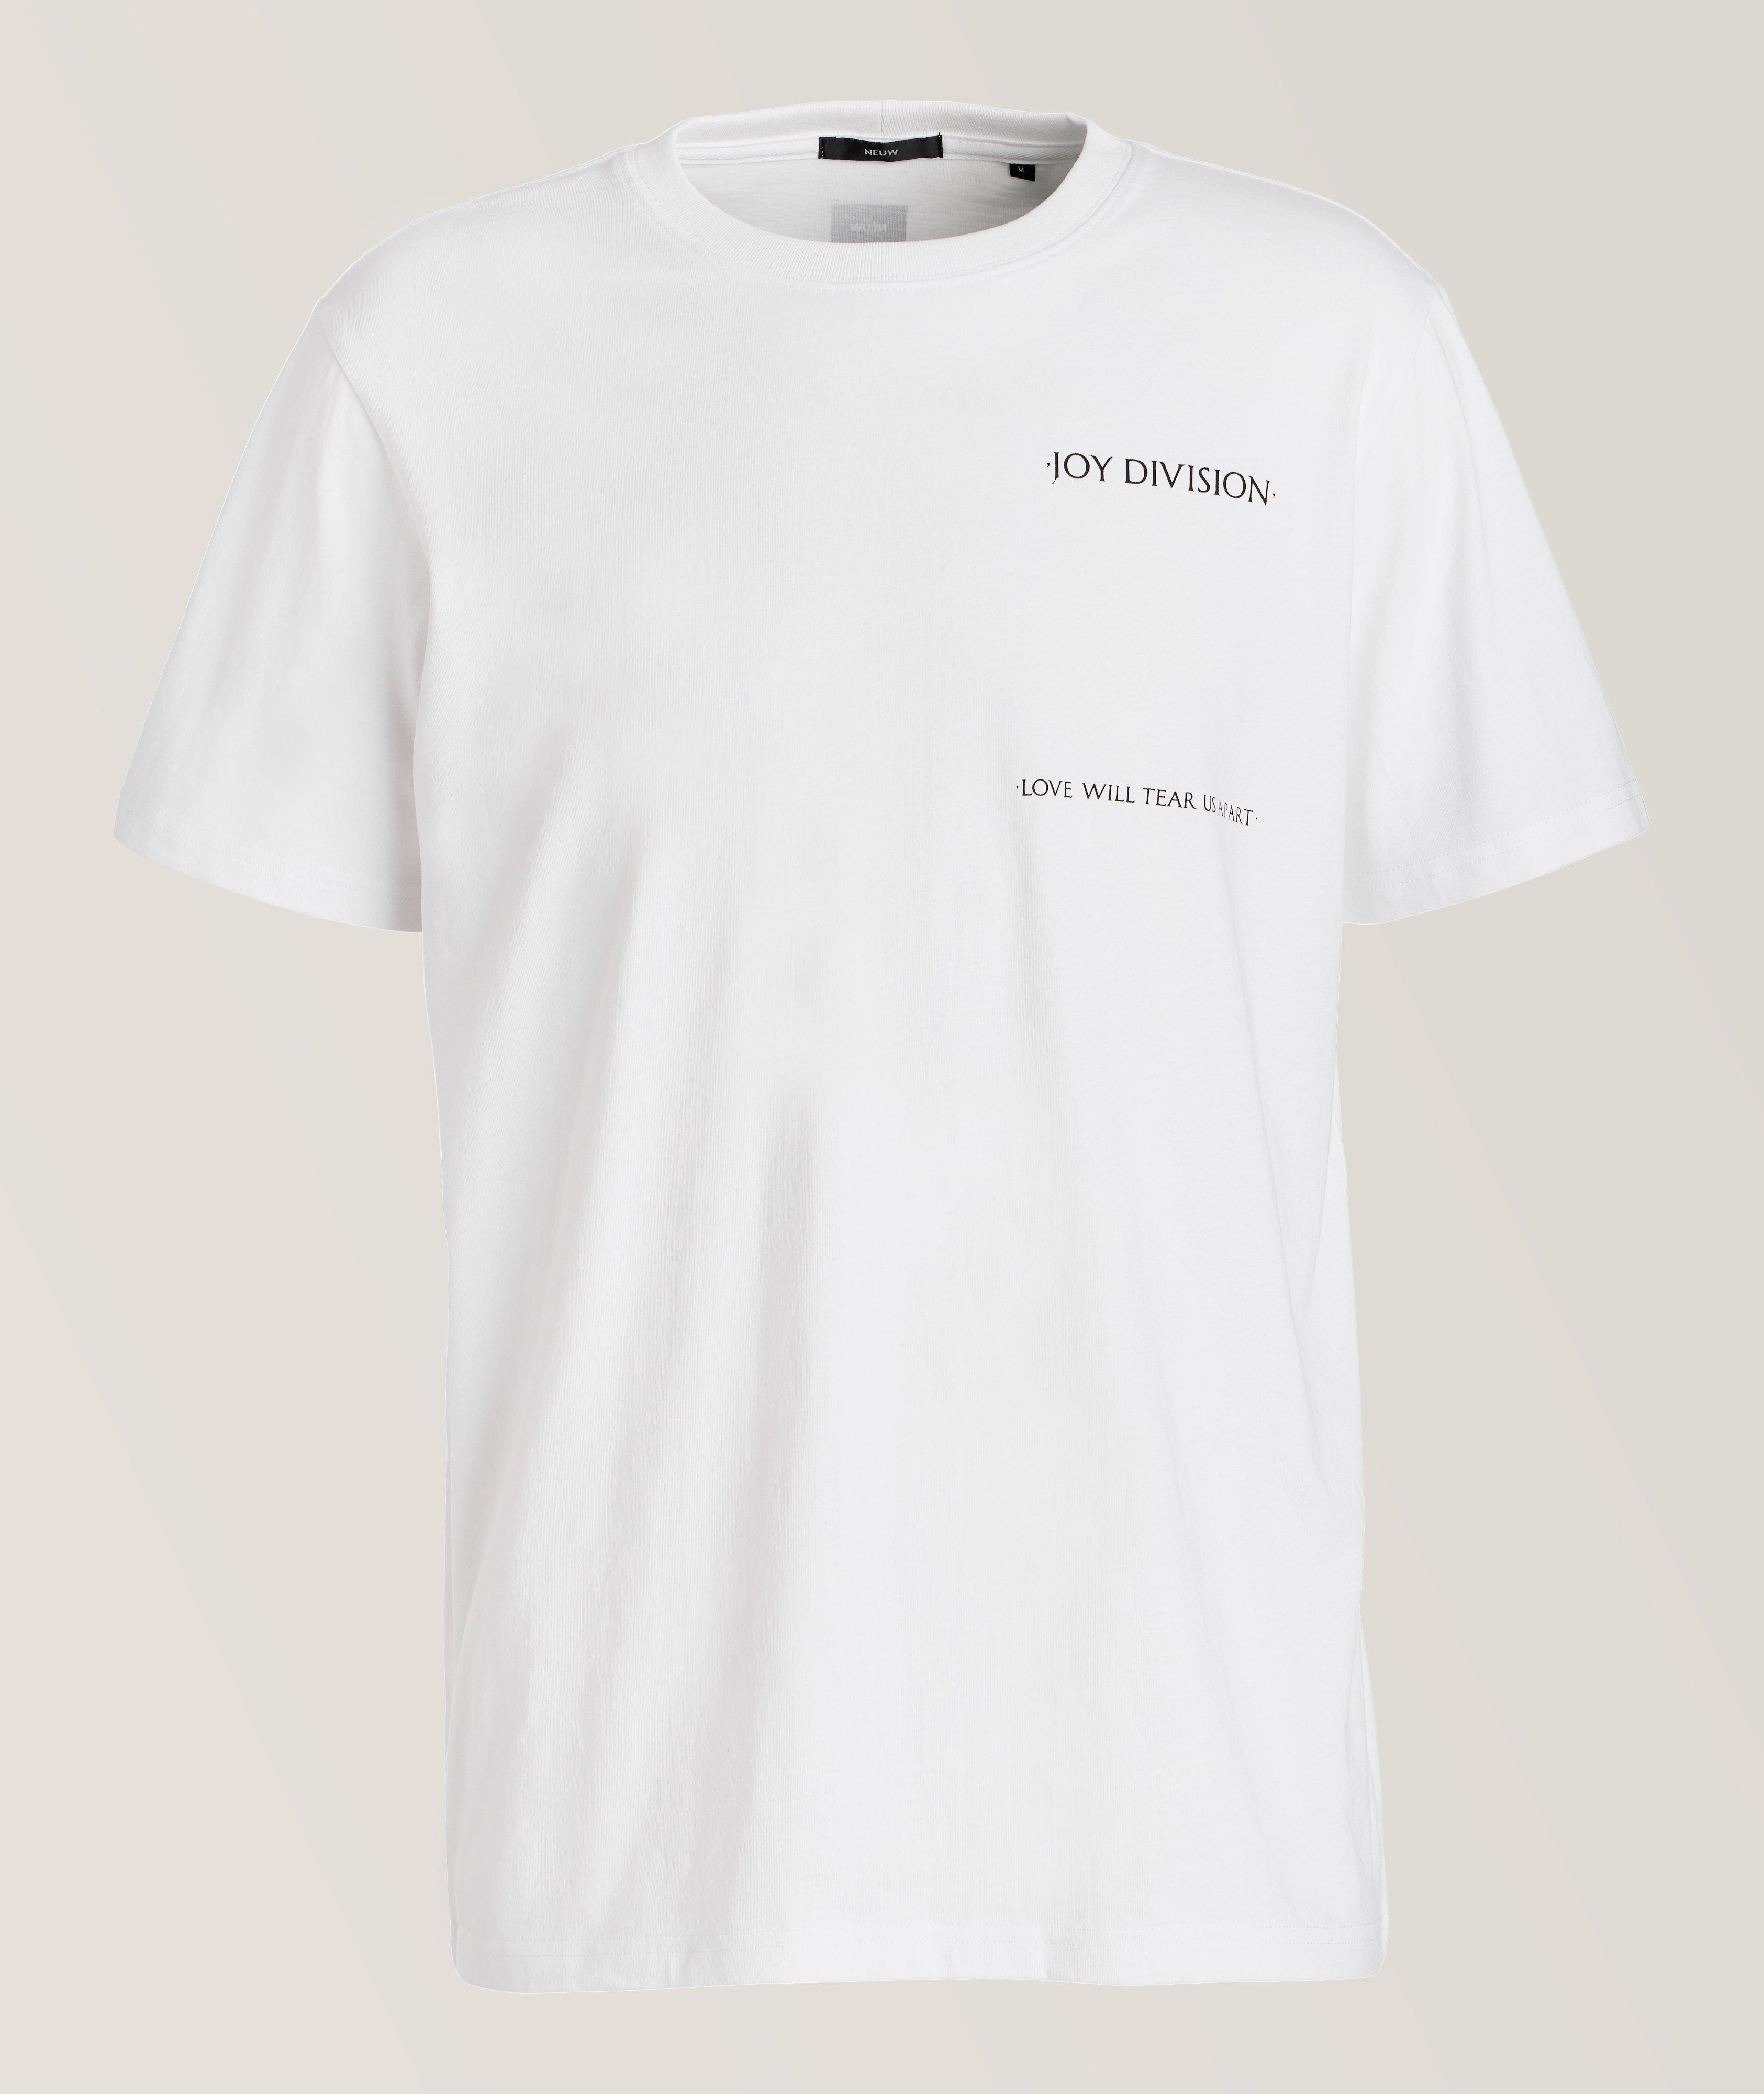 NEUW T-shirt du groupe Joy Division